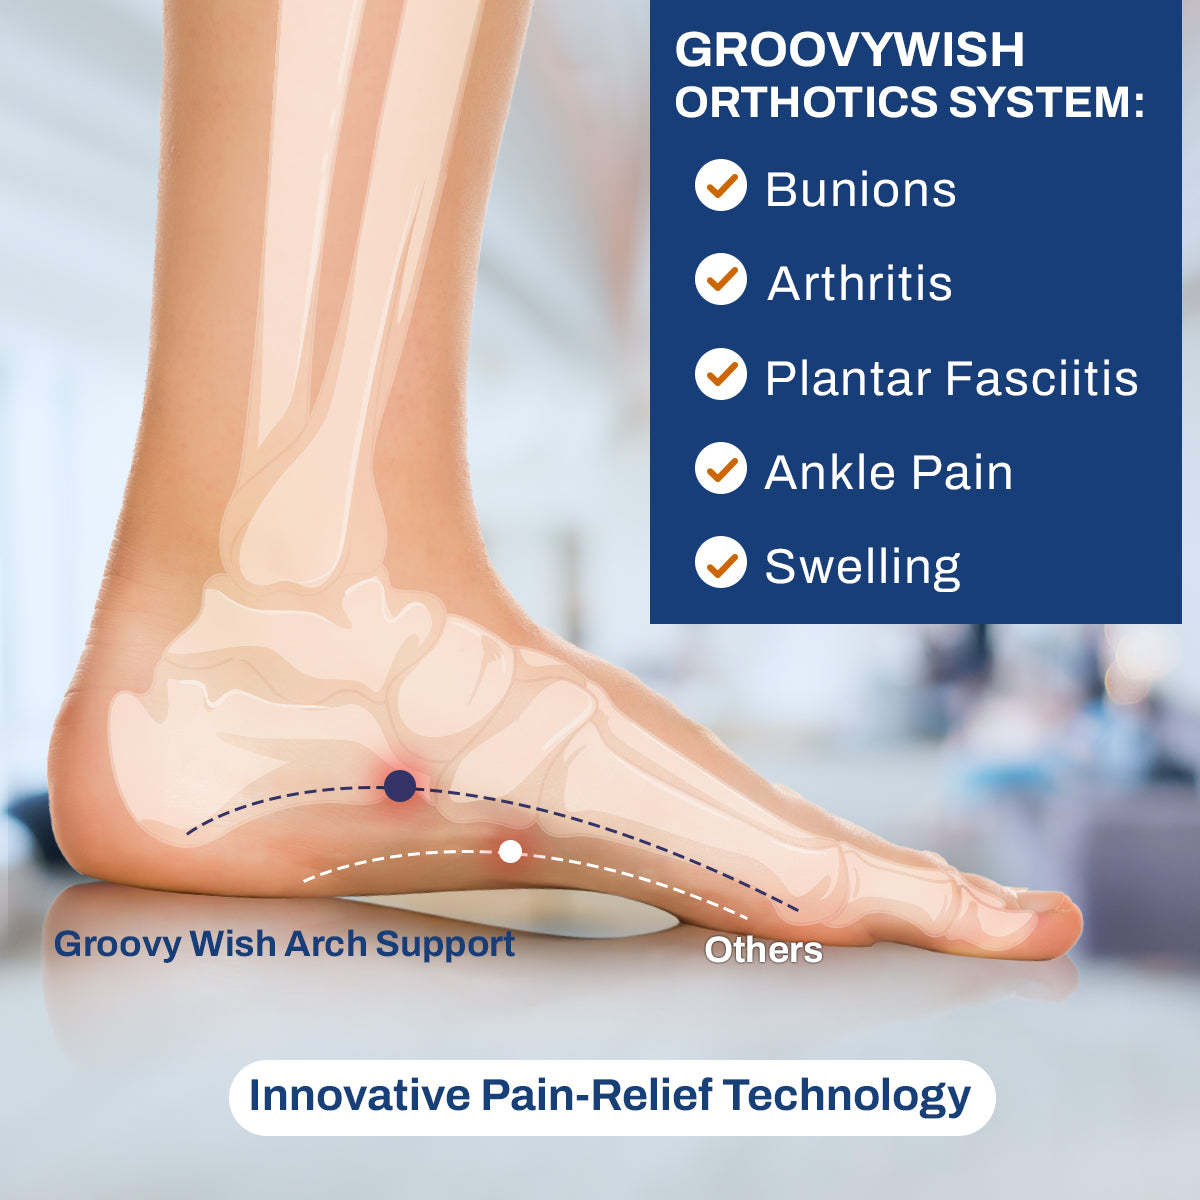 Orthopedic Sandals For Women Comfortable Casual Cross Strap Flip-flops